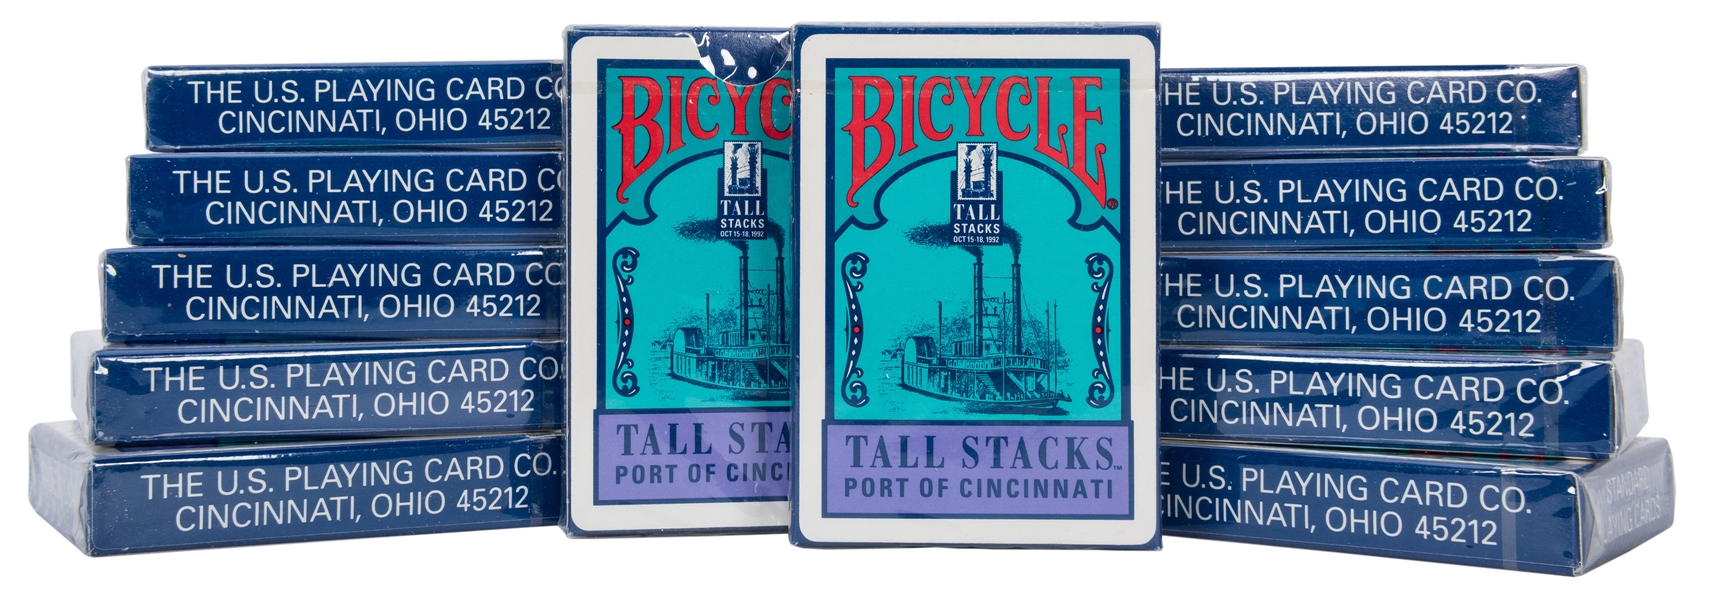 Brick (12 Packs) 1992 Tall Stacks Playing Cards.